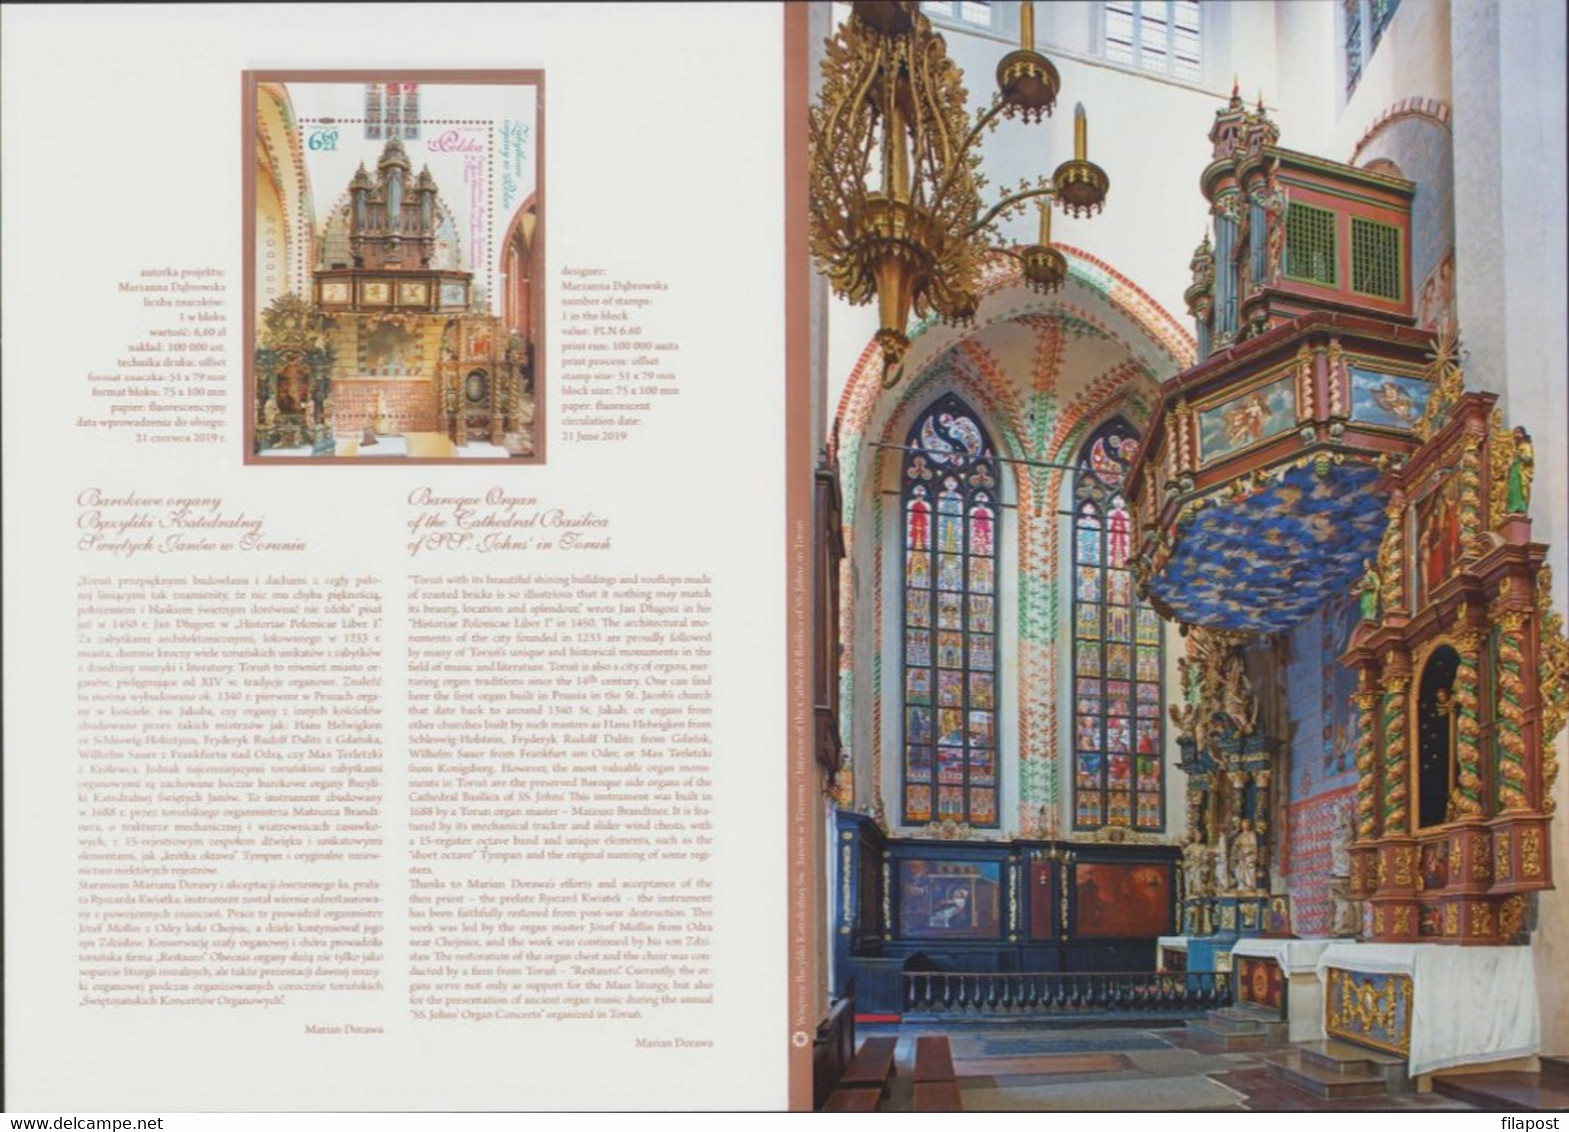 POLAND 2019 Booklet History Pipe Organ In Poland, Baroque Organ, Cathedral Basilica, Torun, Low Number Block MNH** FV - Markenheftchen